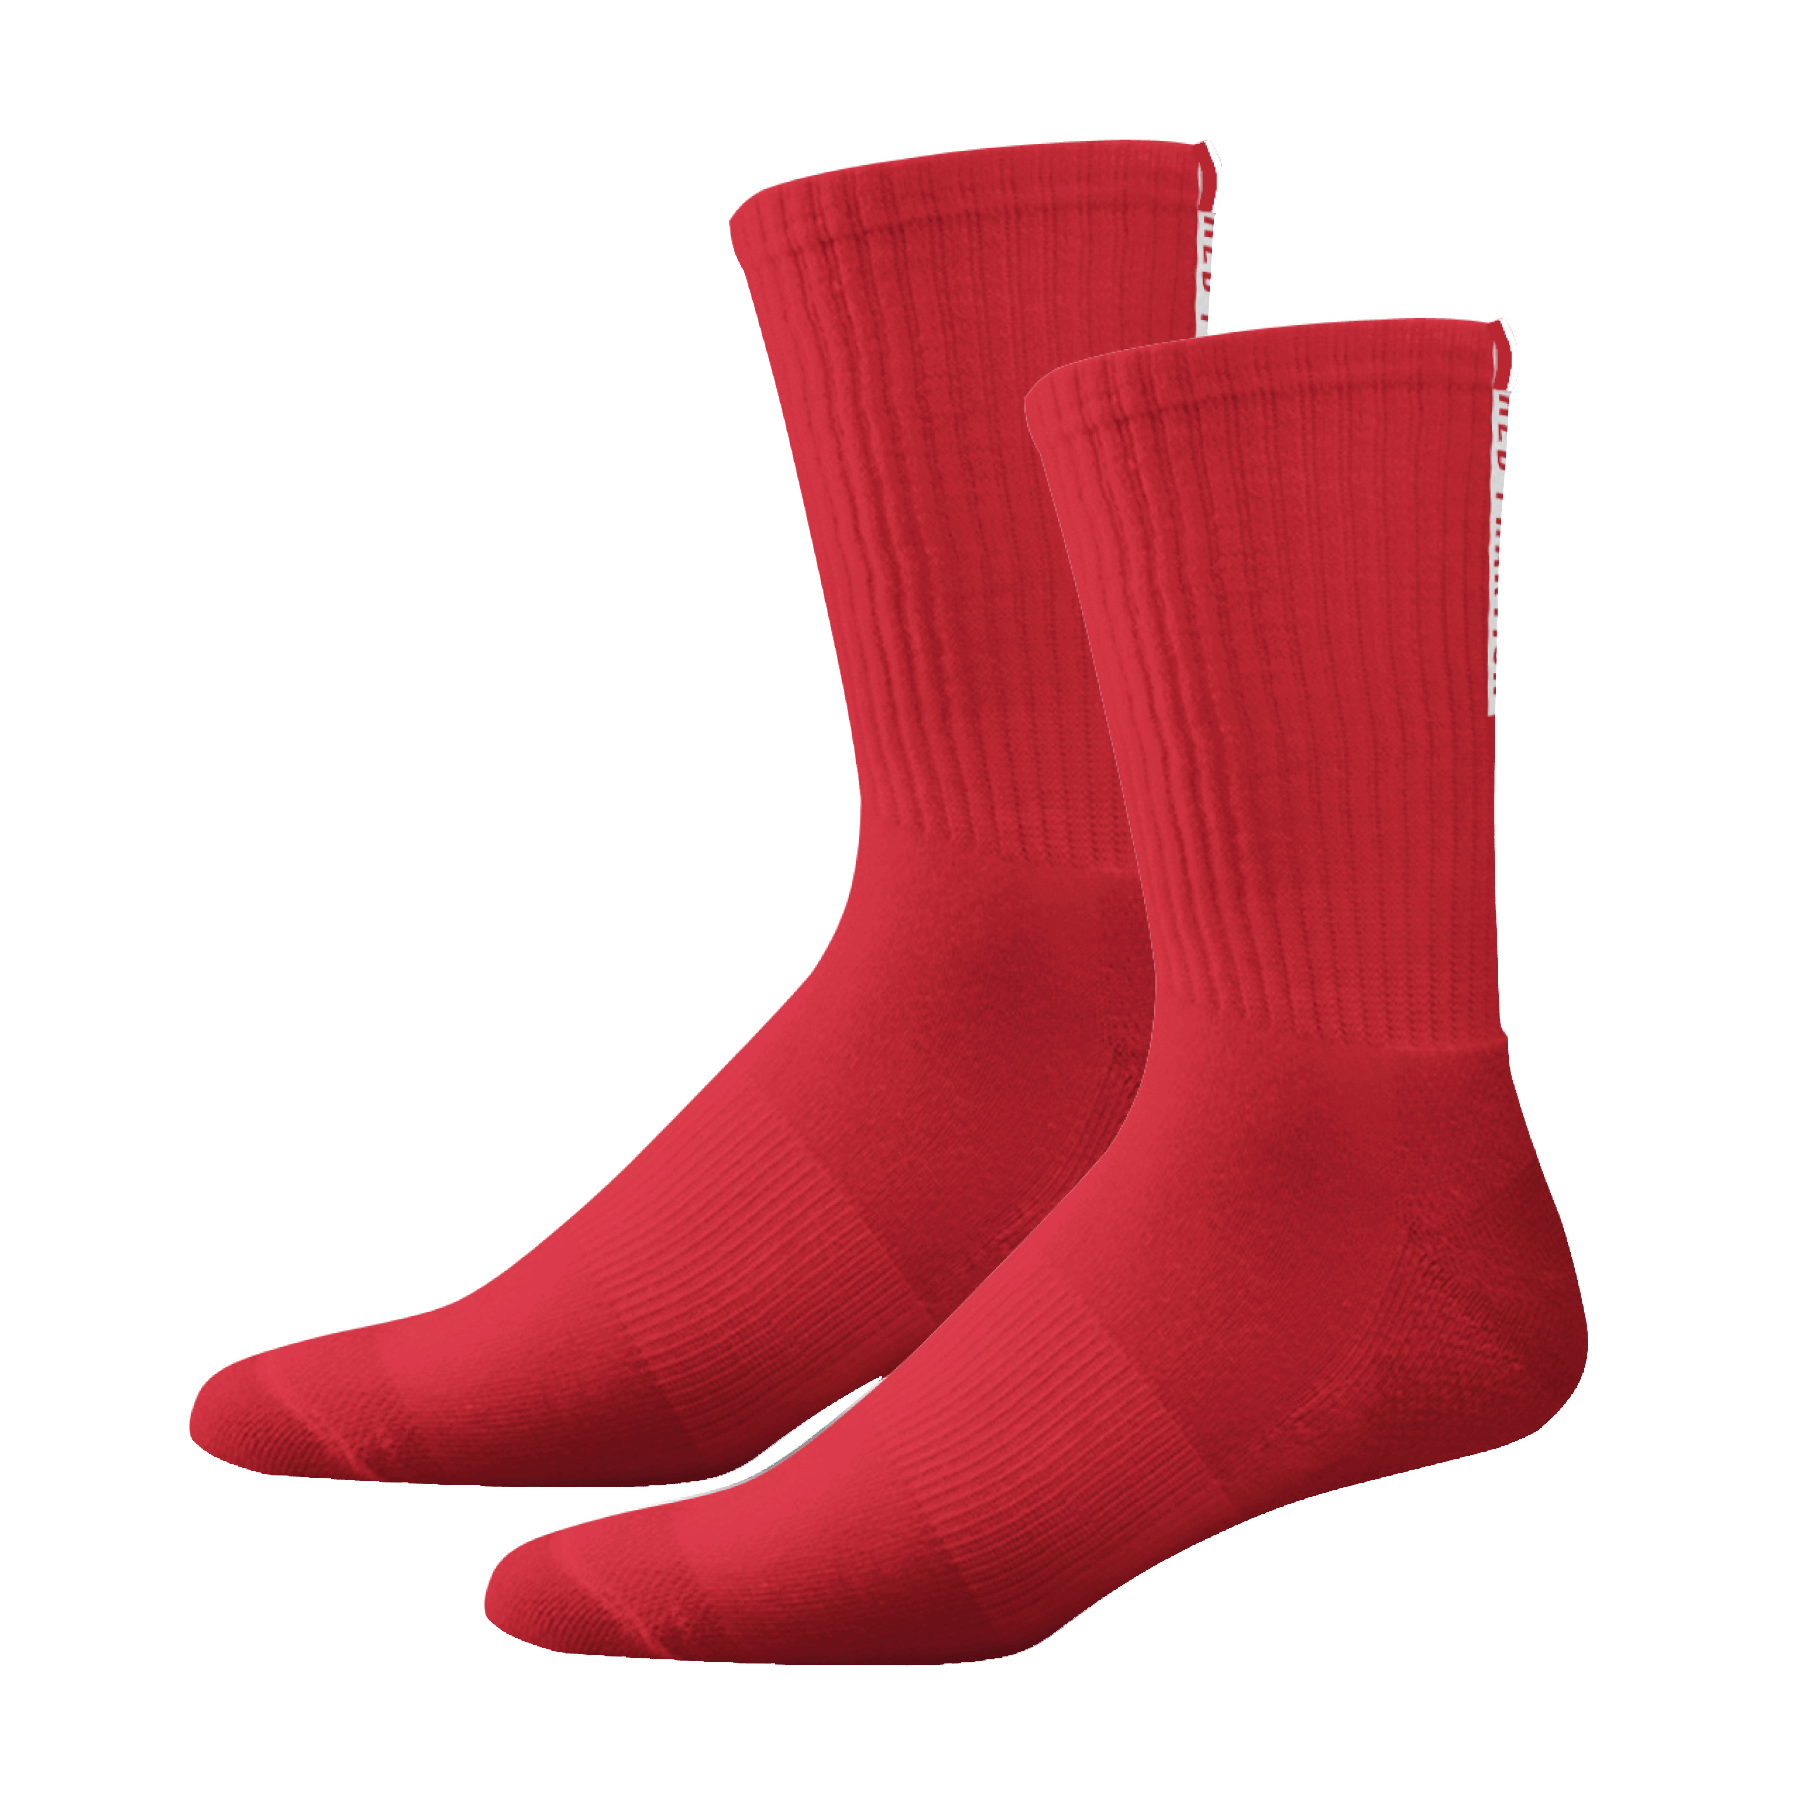 Red RF socks